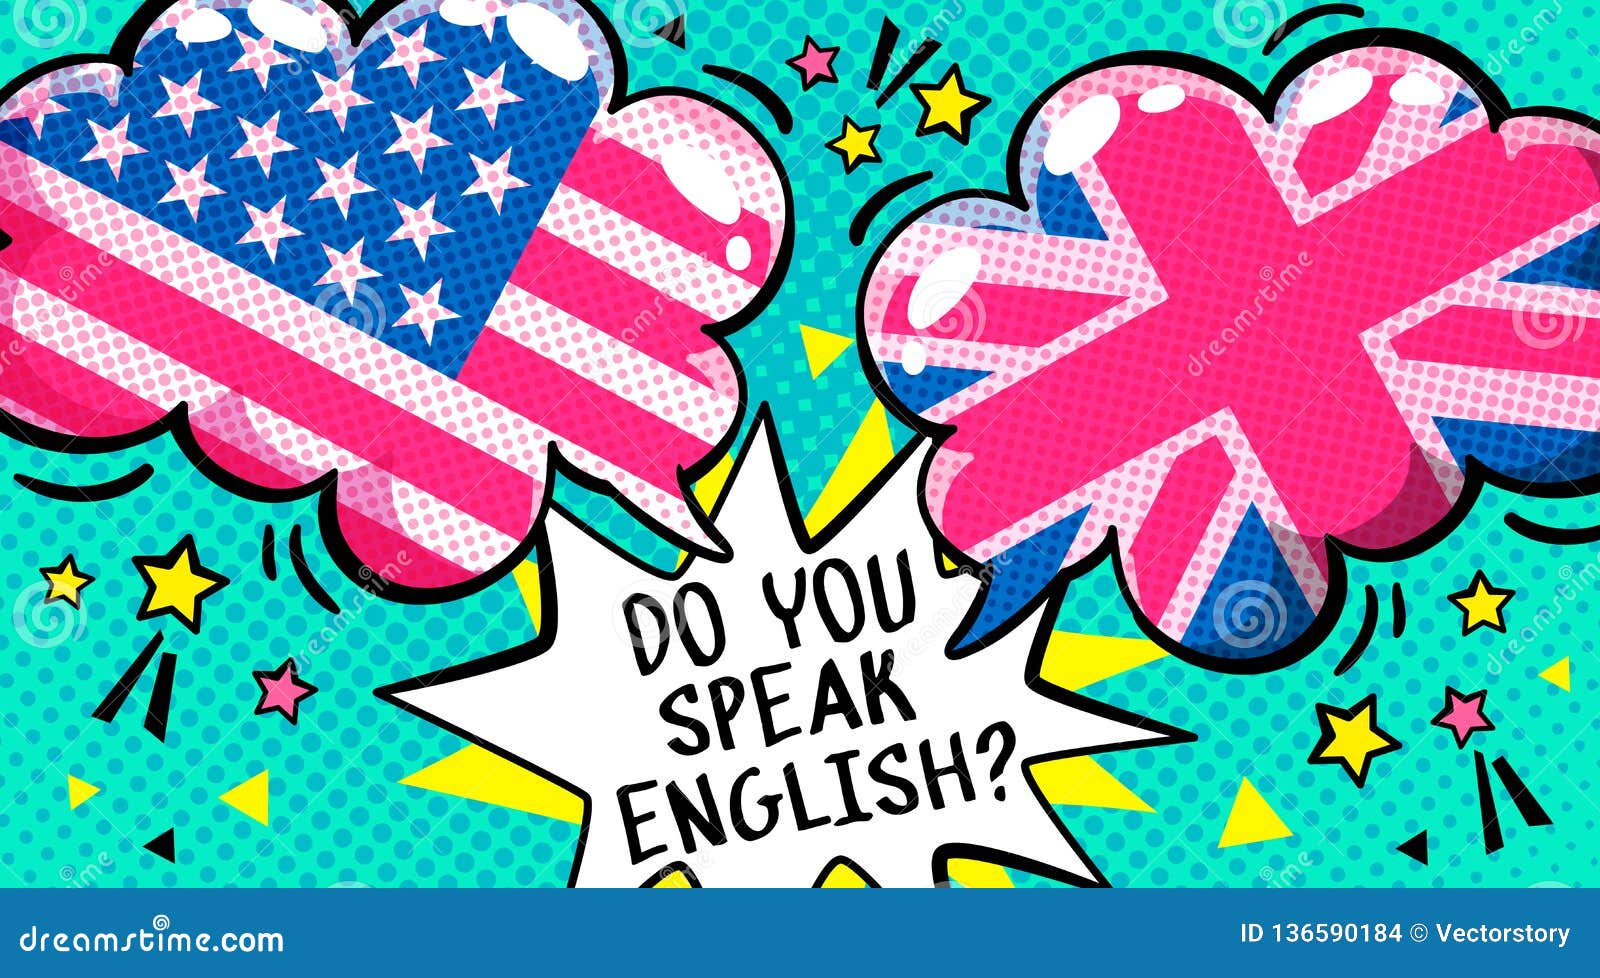 Pop на английском. Speak English. Speak English картинка. Спик Инглиш картинки. Do you speak English.